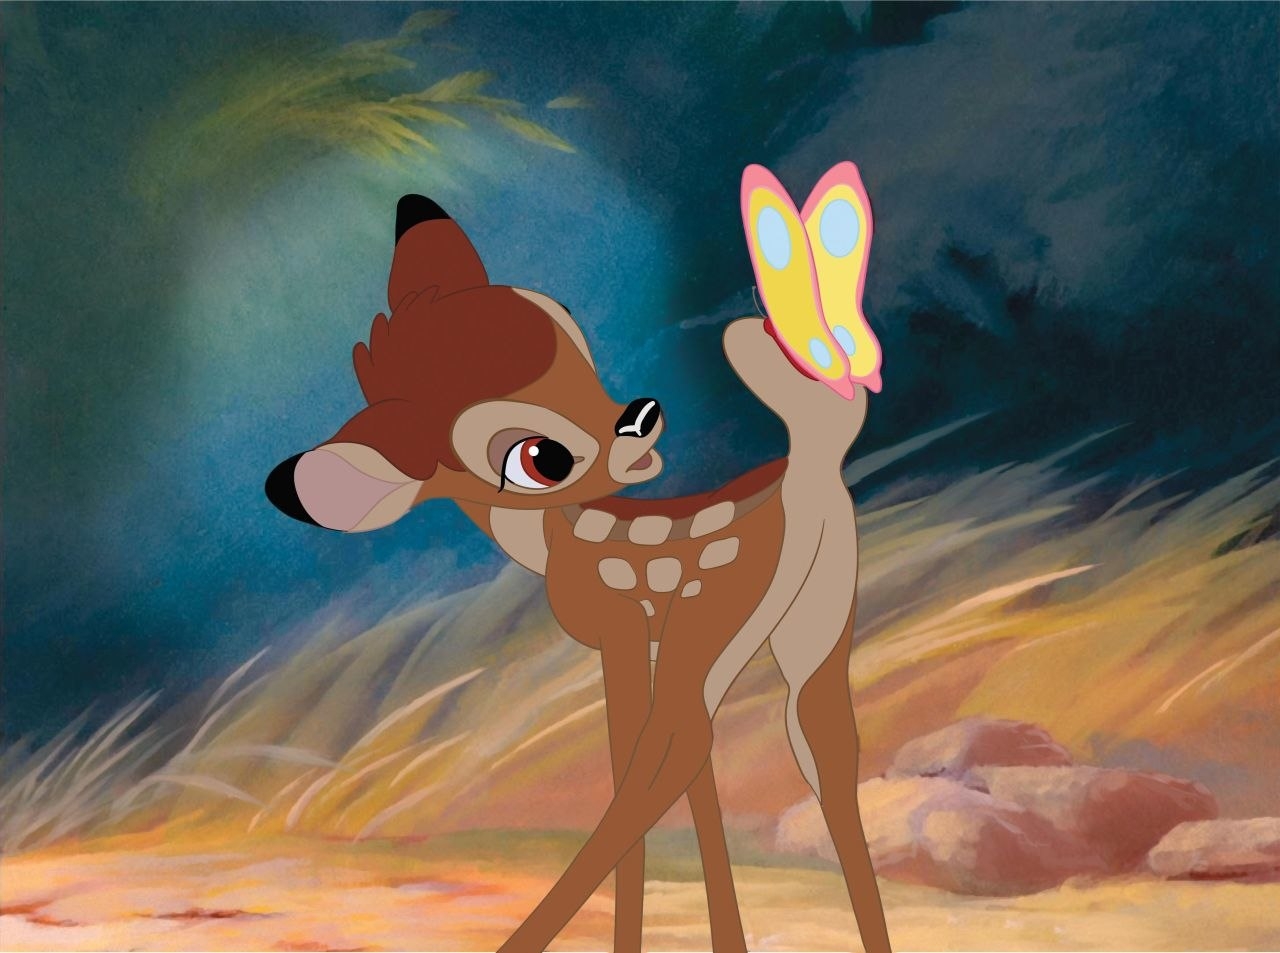 Sarah Polley to Direct Disney's 'Bambi' Live-Action Remake